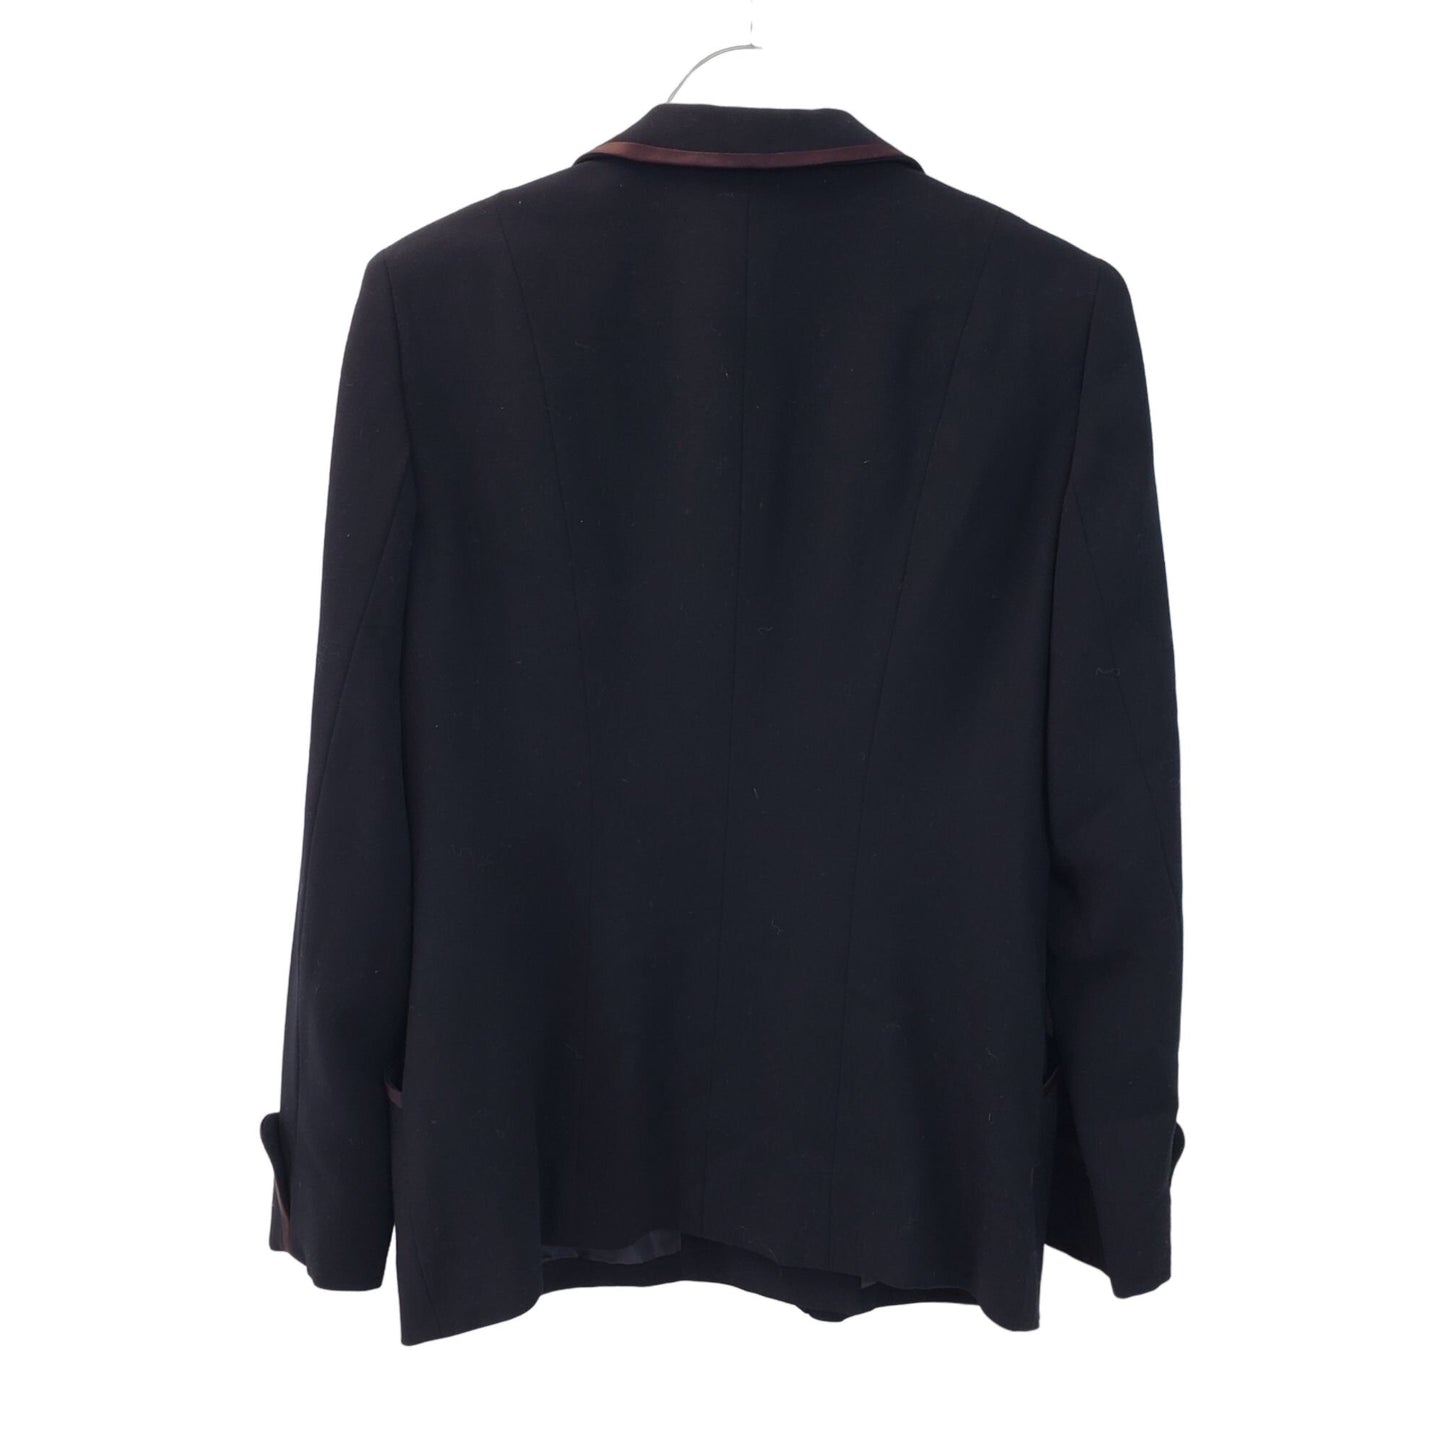 DKNY Wool Double-Breasted Blazer Jacket Size 6